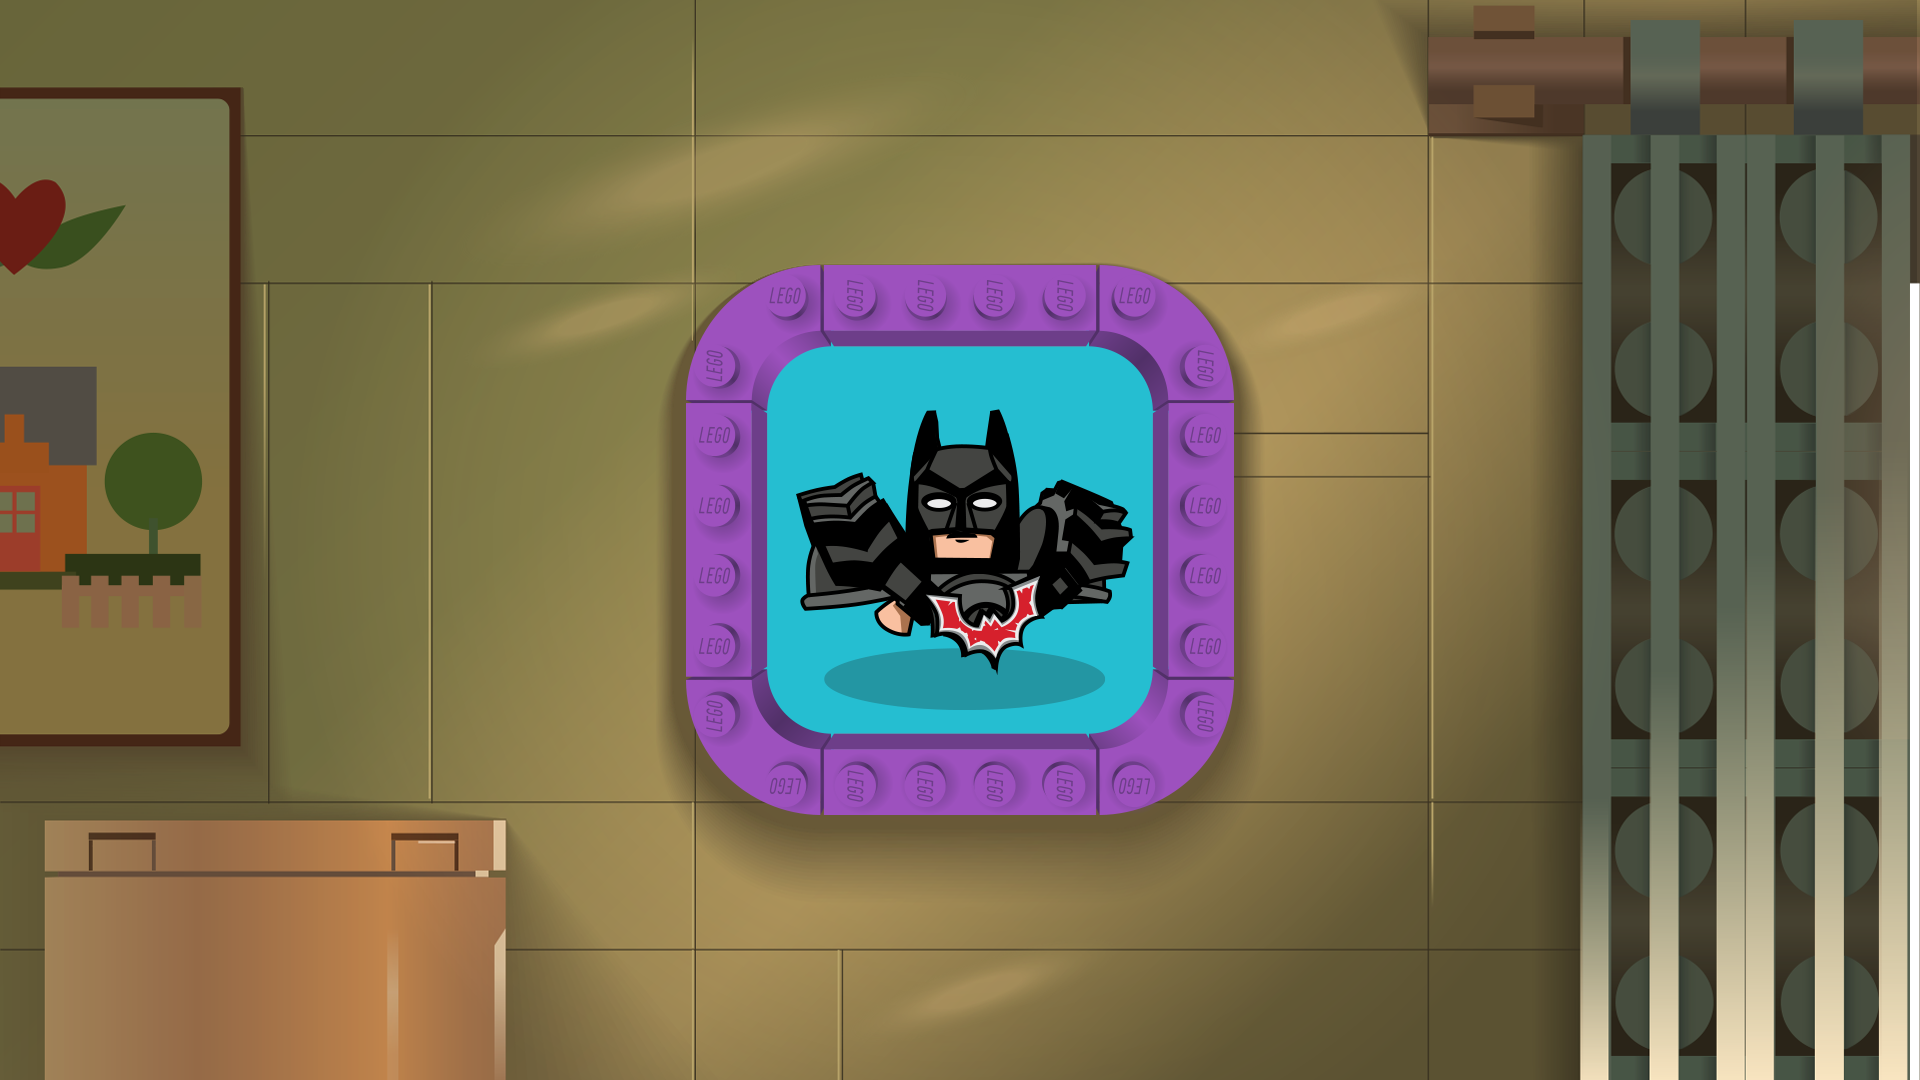 The Man of Bats